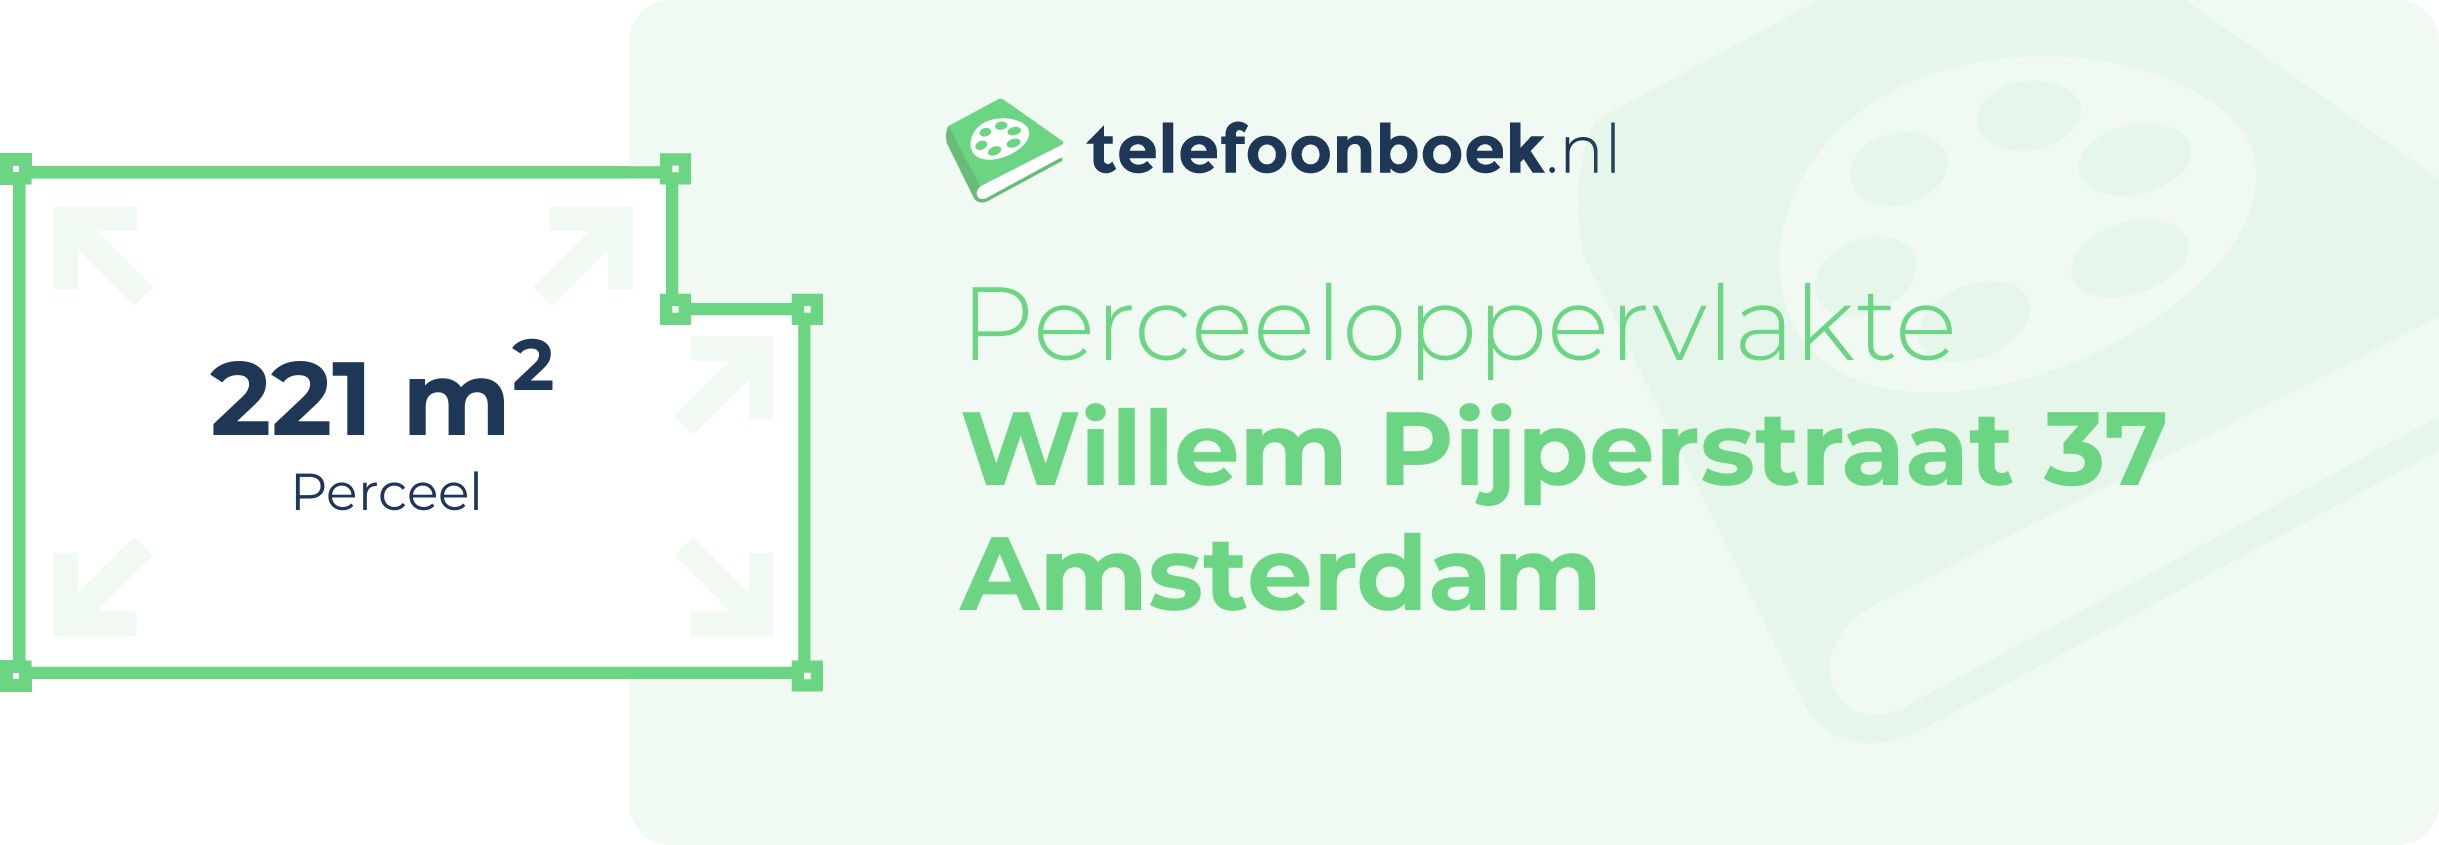 Perceeloppervlakte Willem Pijperstraat 37 Amsterdam